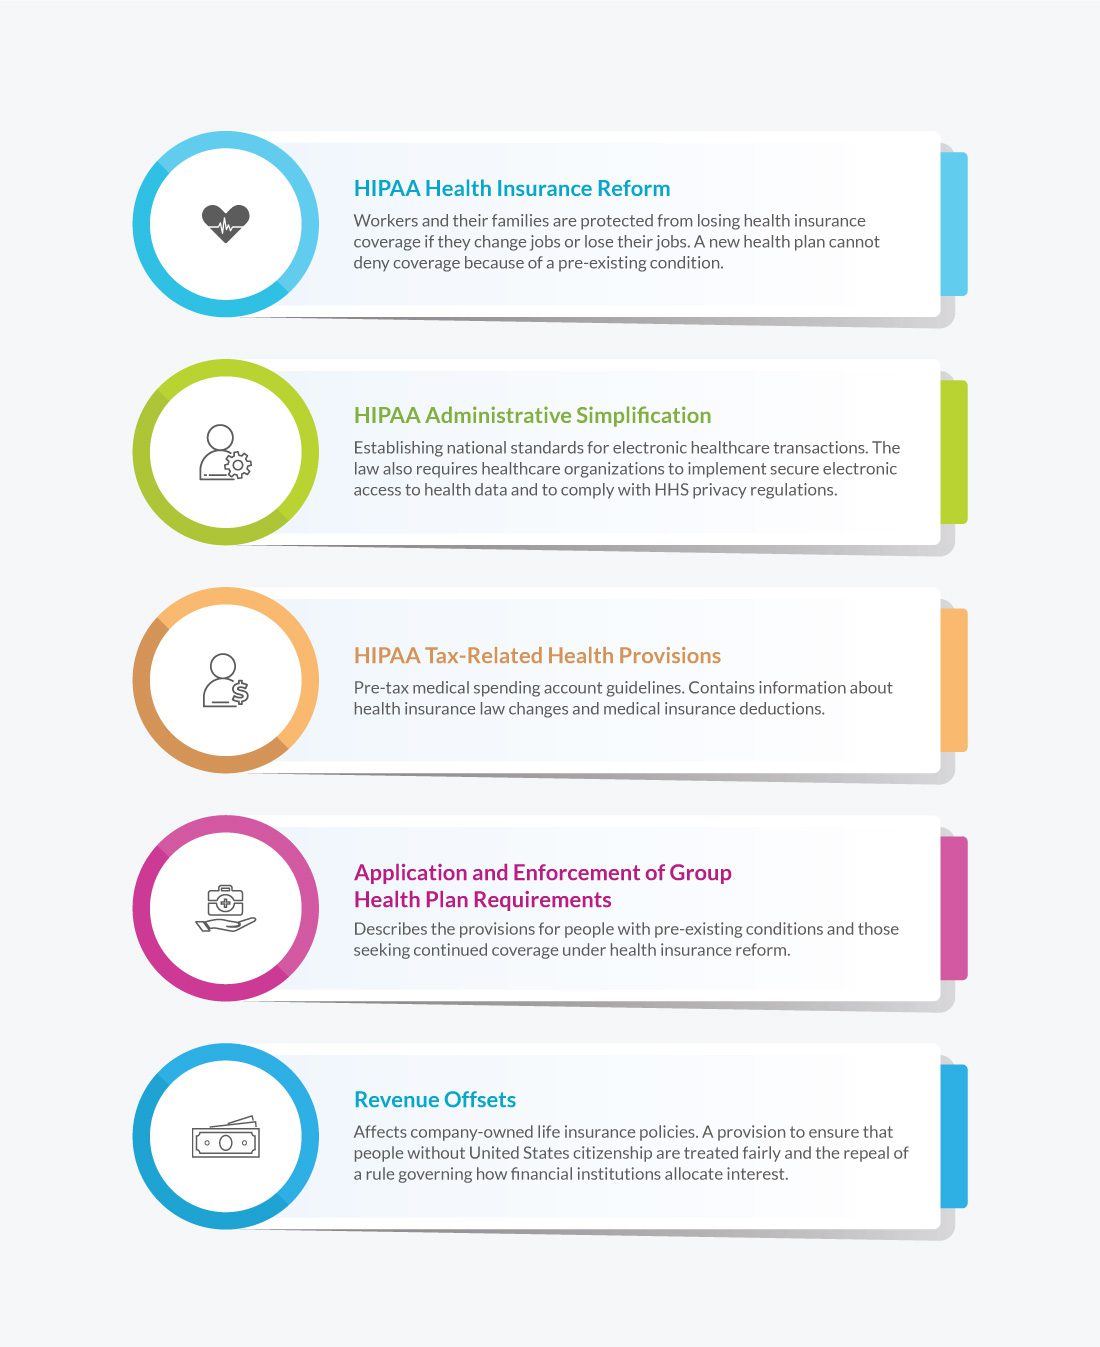 Five main components of HIPAA